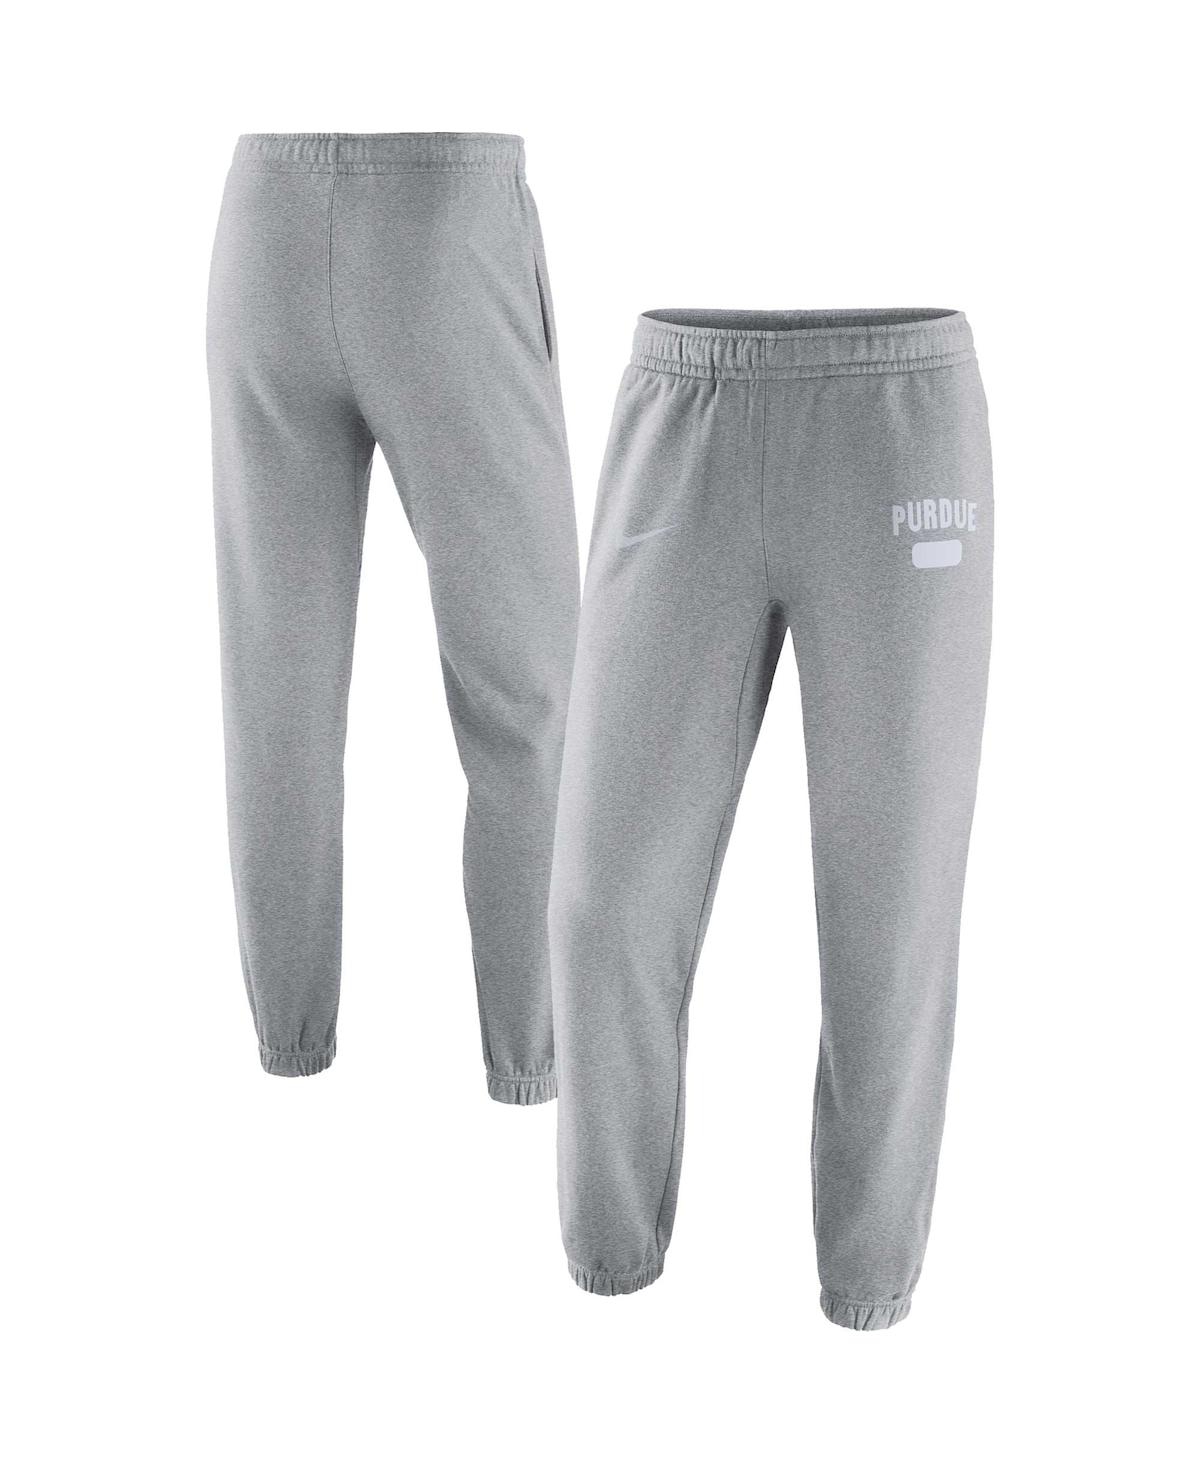 Shop Nike Men's  Heathered Gray Purdue Boilermakers Saturday Fleece Pants